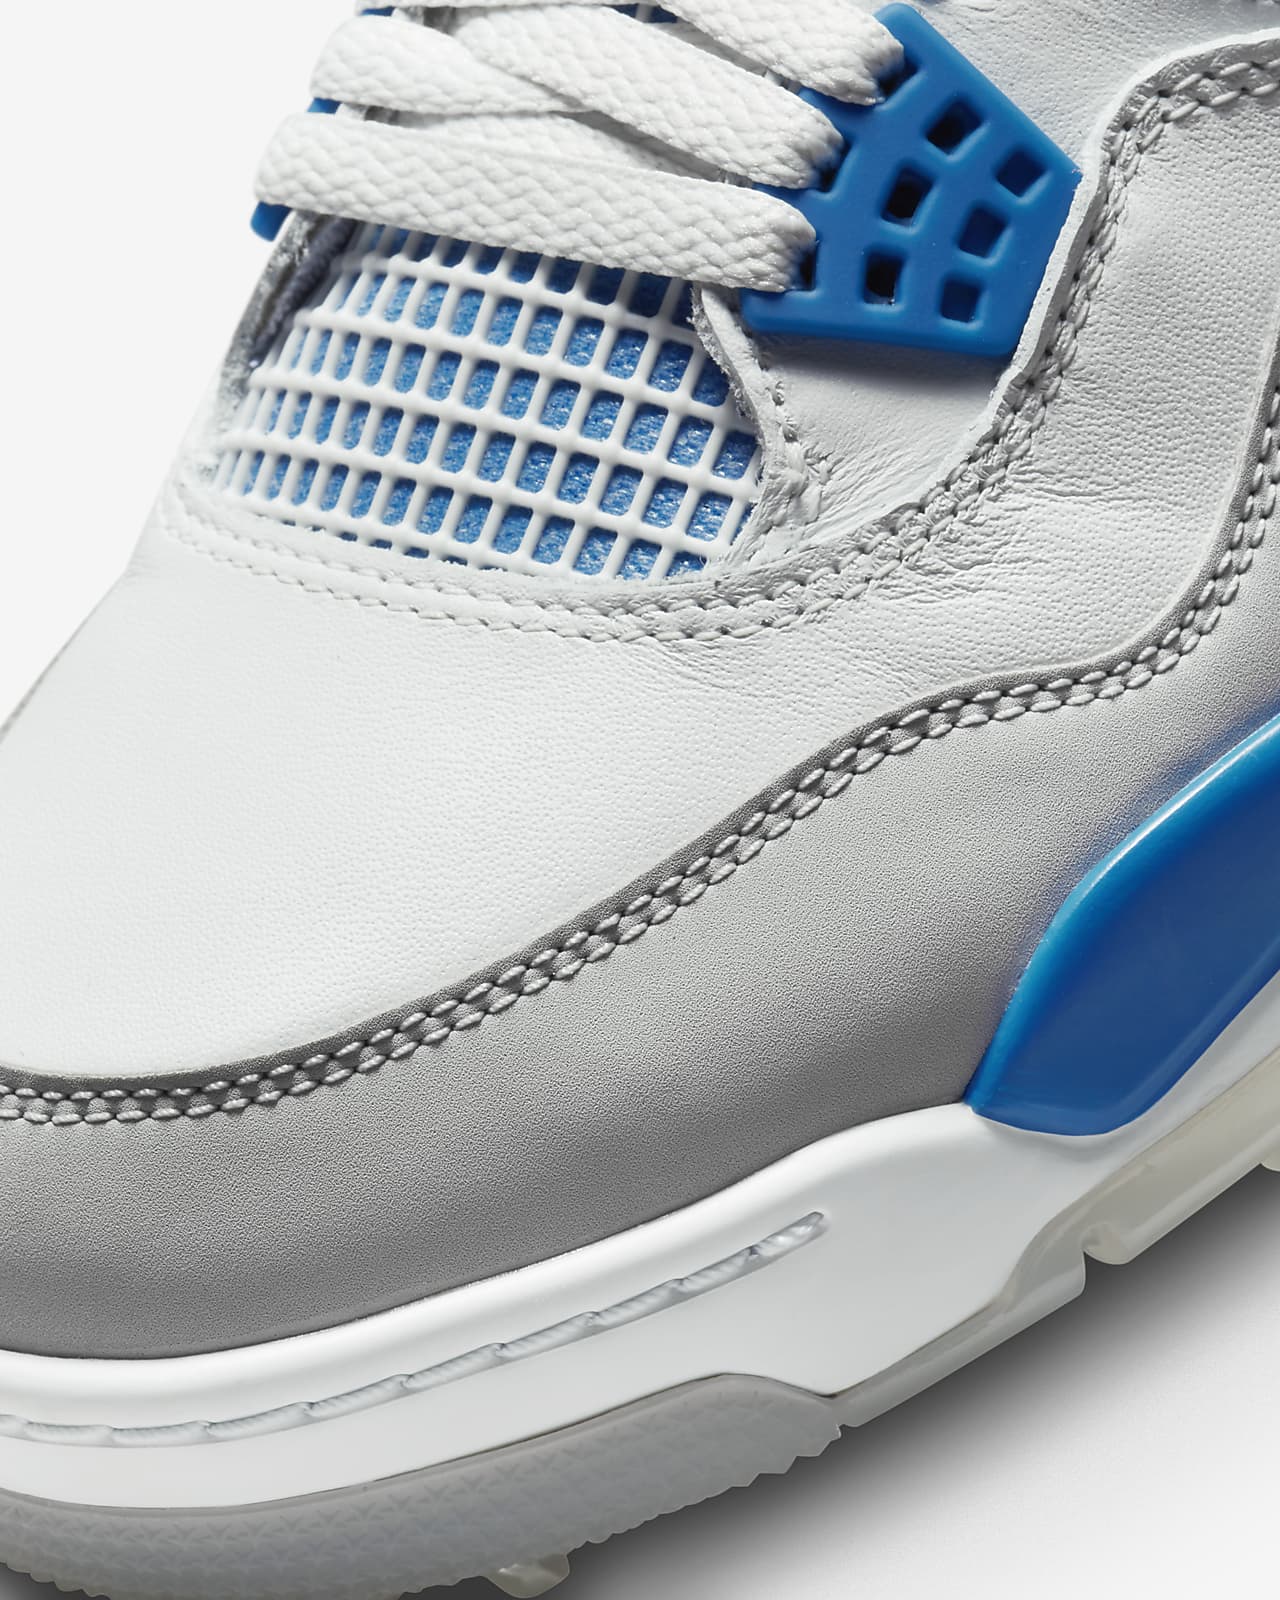 Jordan 4 G Golf Shoes. Nike PH